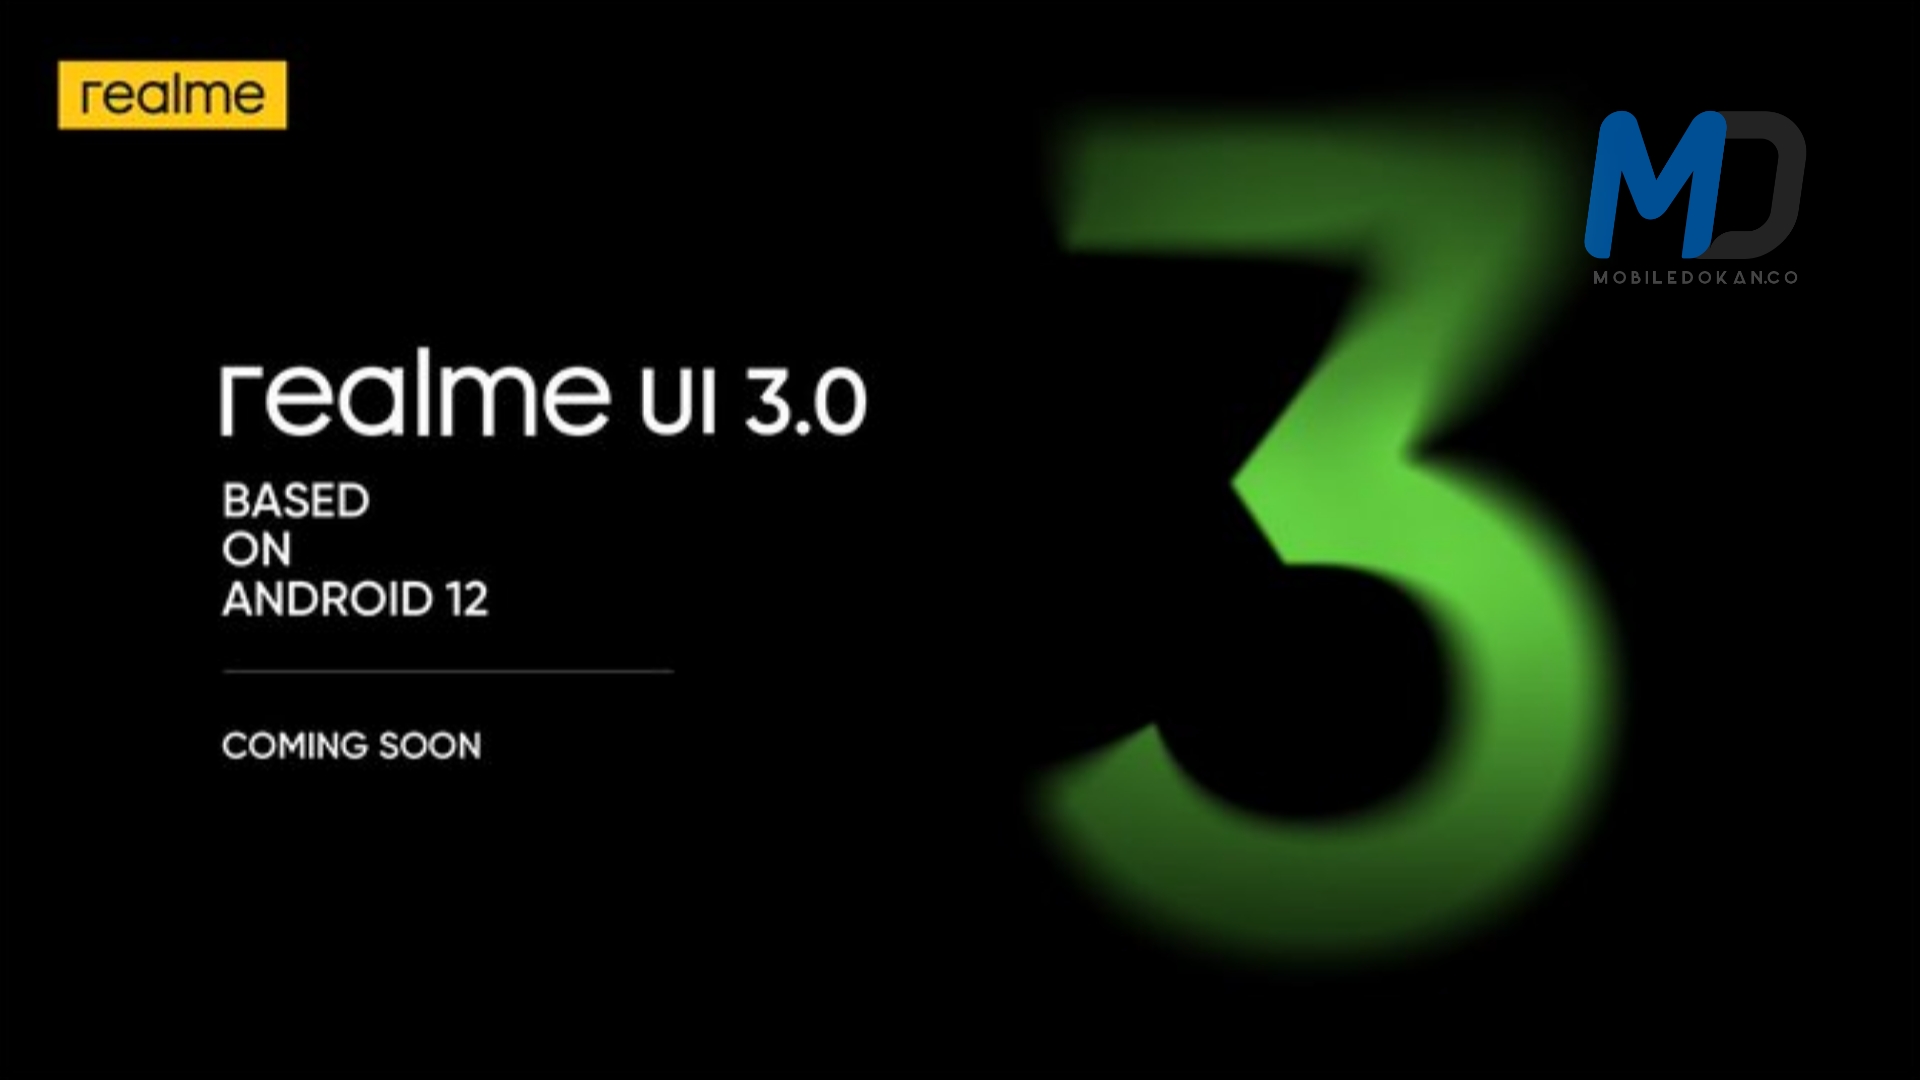 Madhav Sheth confirms realme UI 3.0 will bring Android 12